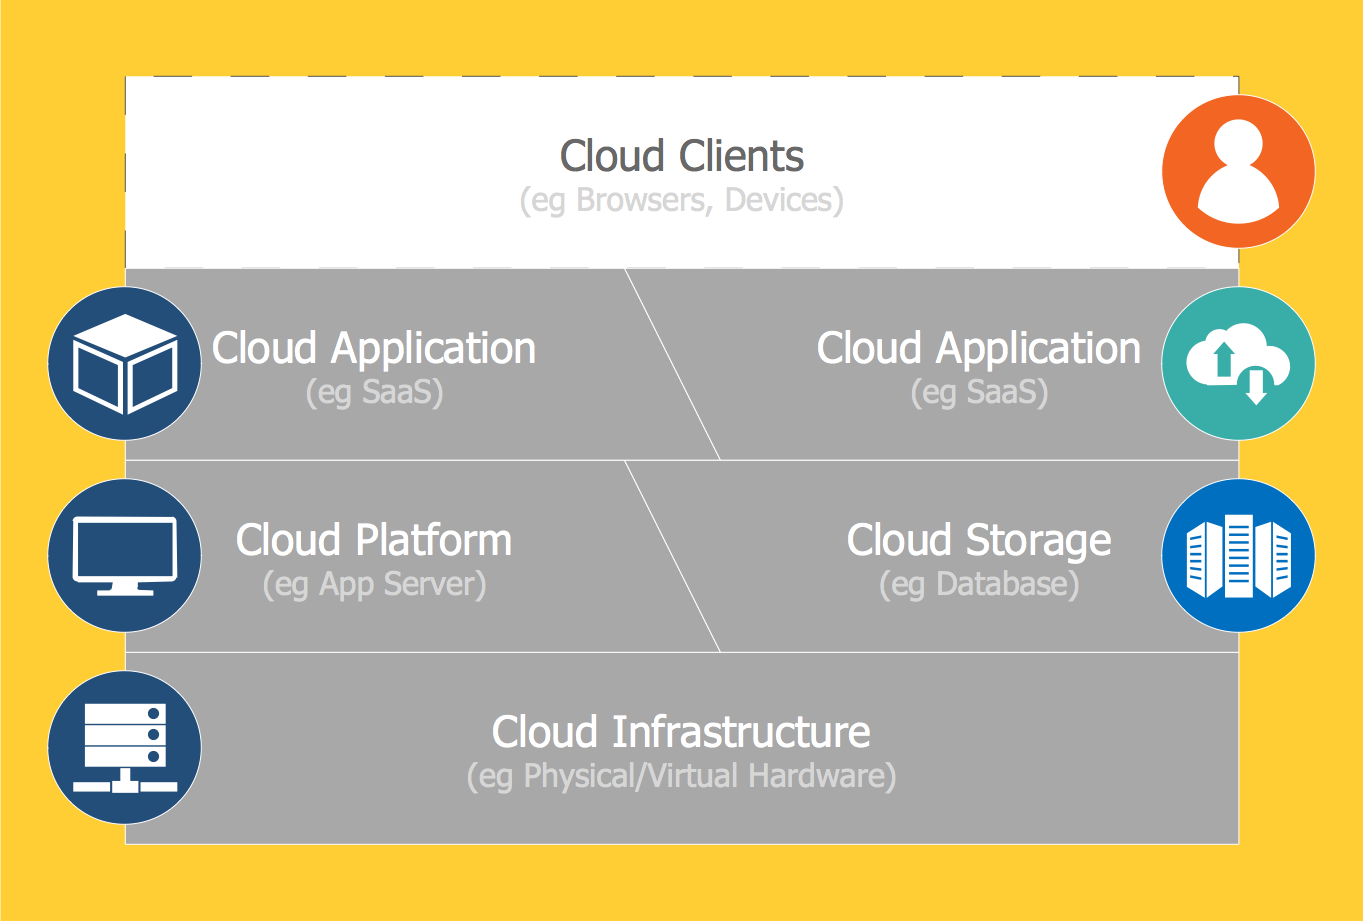 Cloud Computing Stack